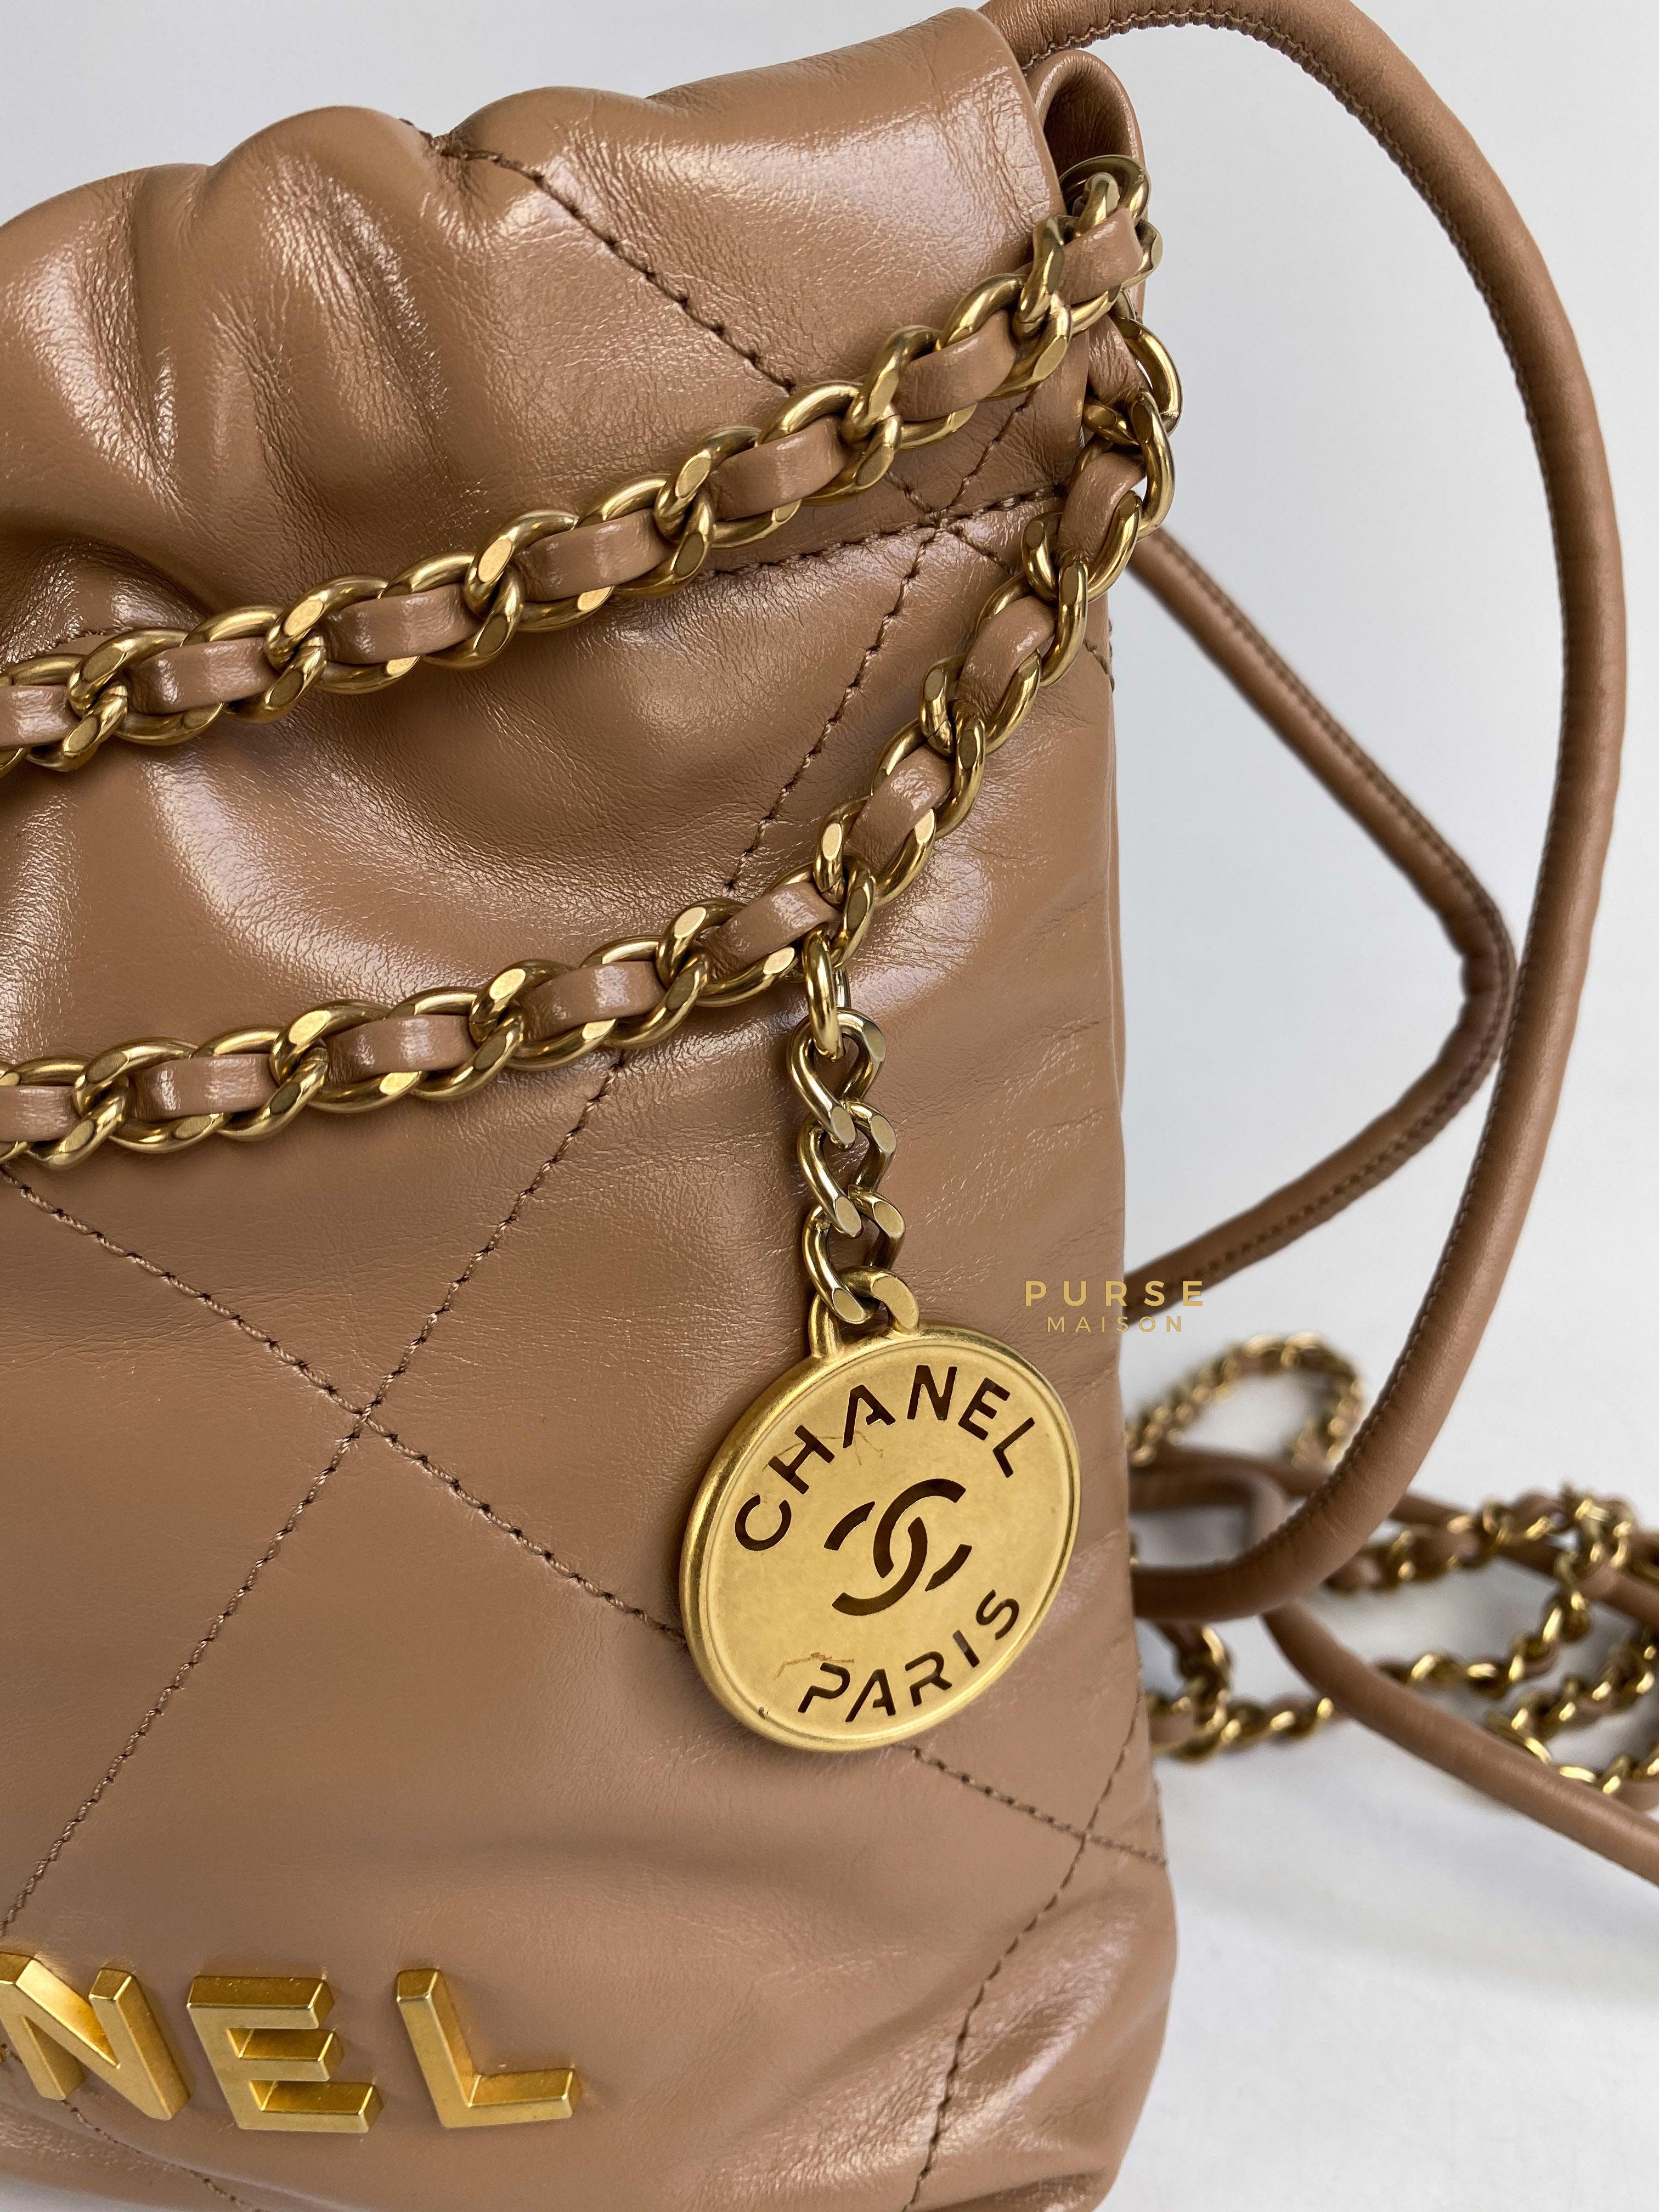 Chanel Mini 22 Shiny Calfskin 23B Dark Beige (Microchip) | Purse Maison Luxury Bags Shop